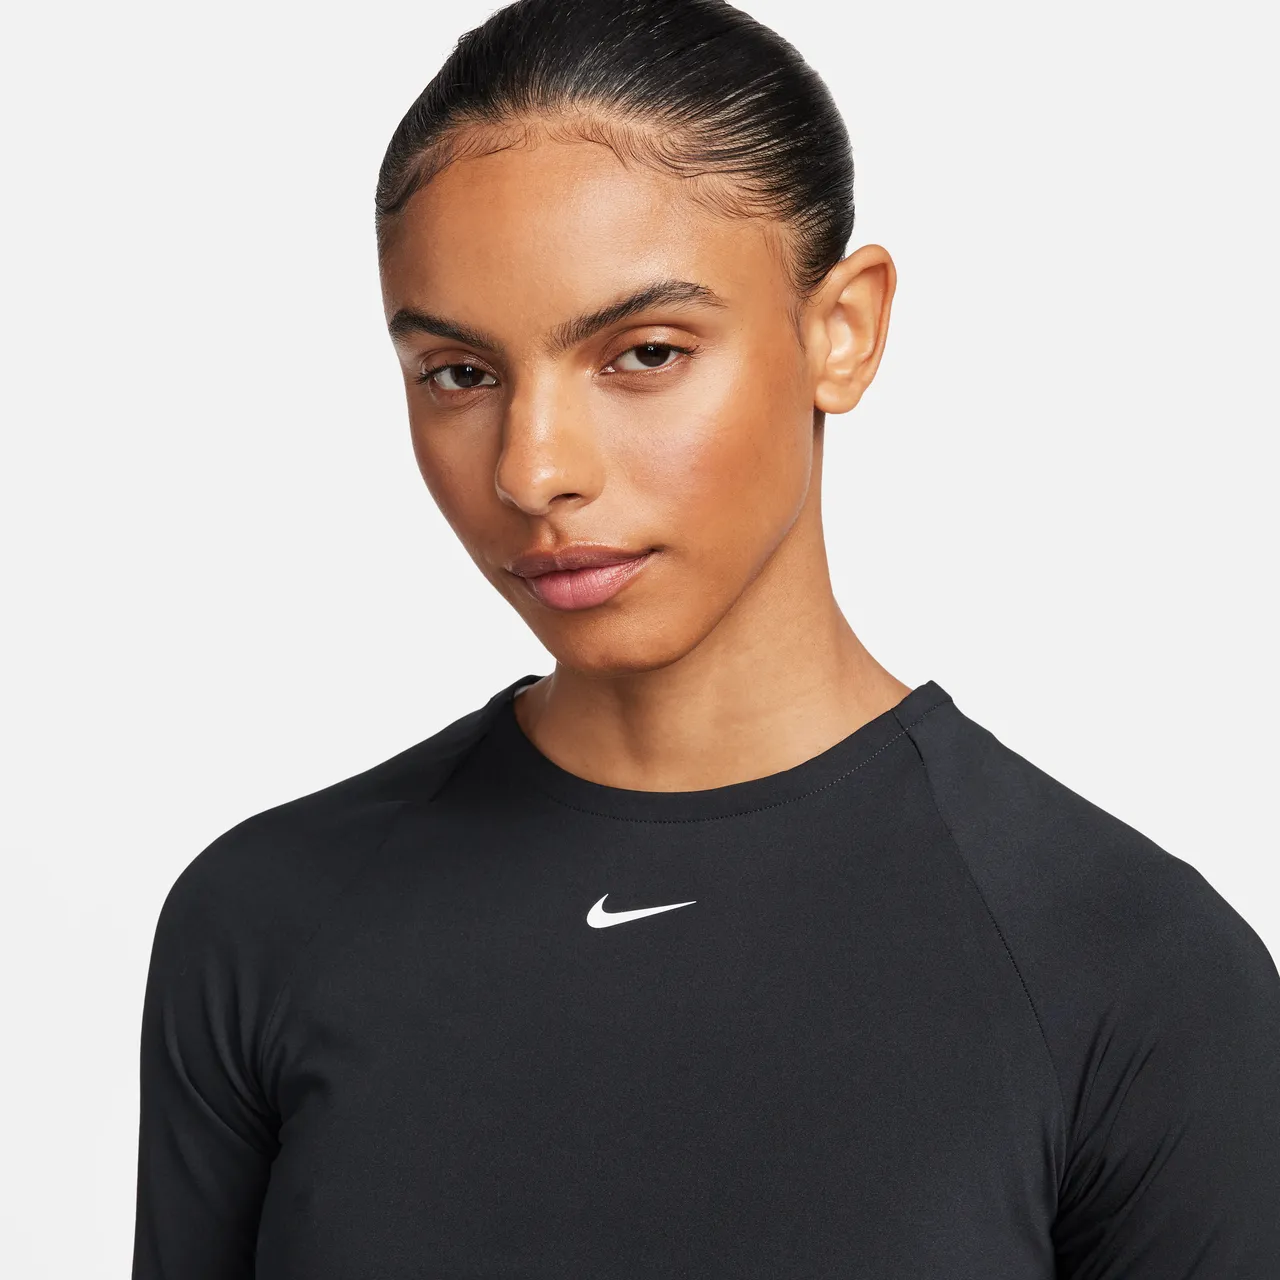 Nike Pro 365 Dri-FIT verkürztes Longsleeve-Oberteil für Damen - Schwarz